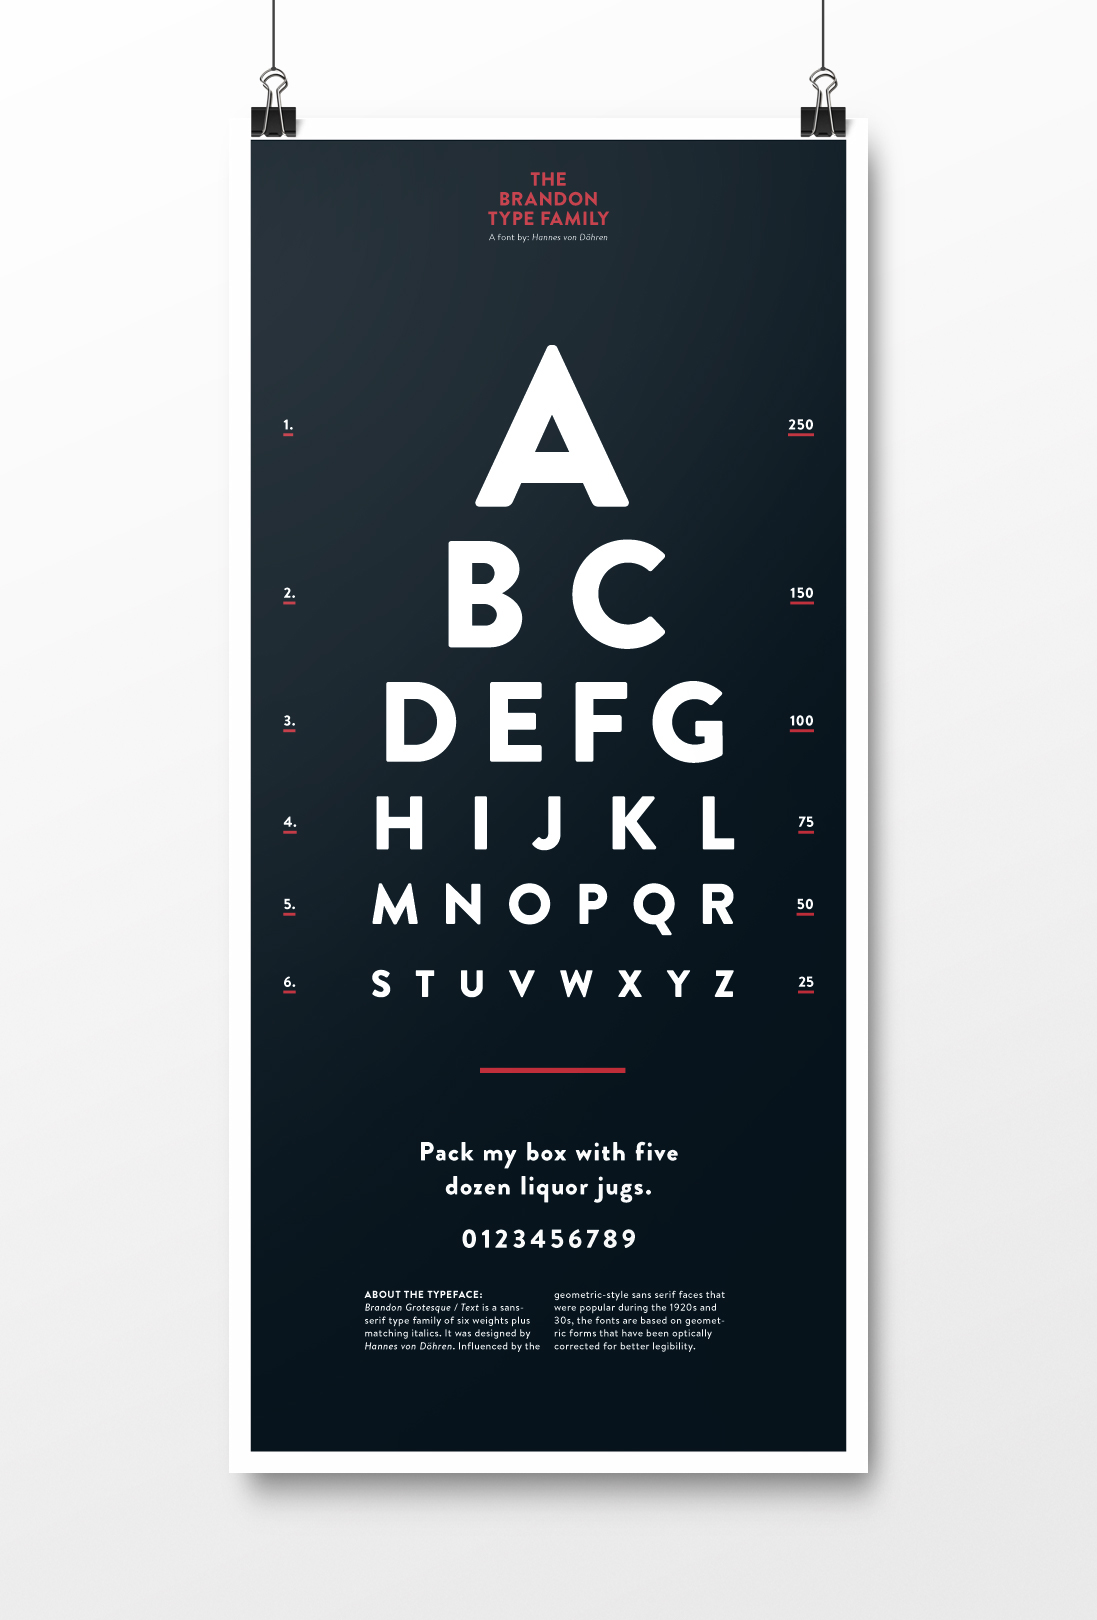 brandon grotesque text type specimen WDKA font redesign